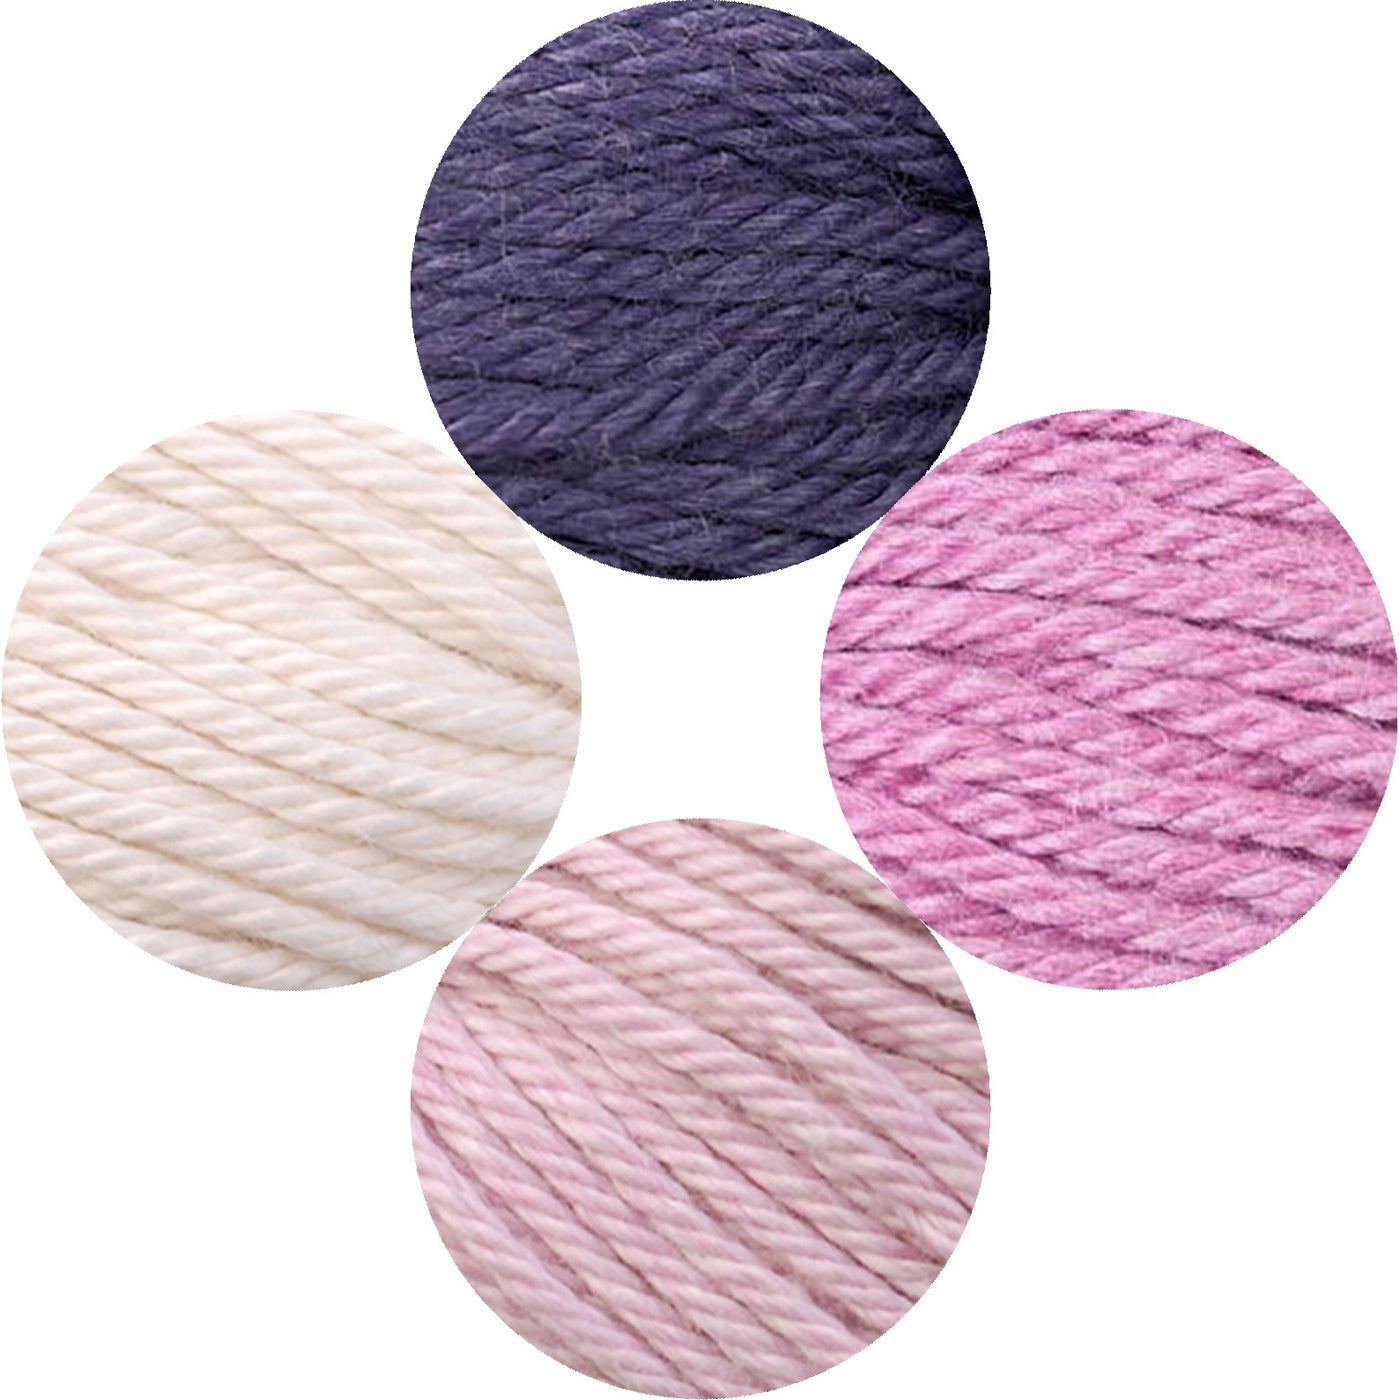 Chevron Stripes Baby Blanket Kit (Violet 8487, Dahlia 8488, Alyssum 8411, Magnolia 8401)